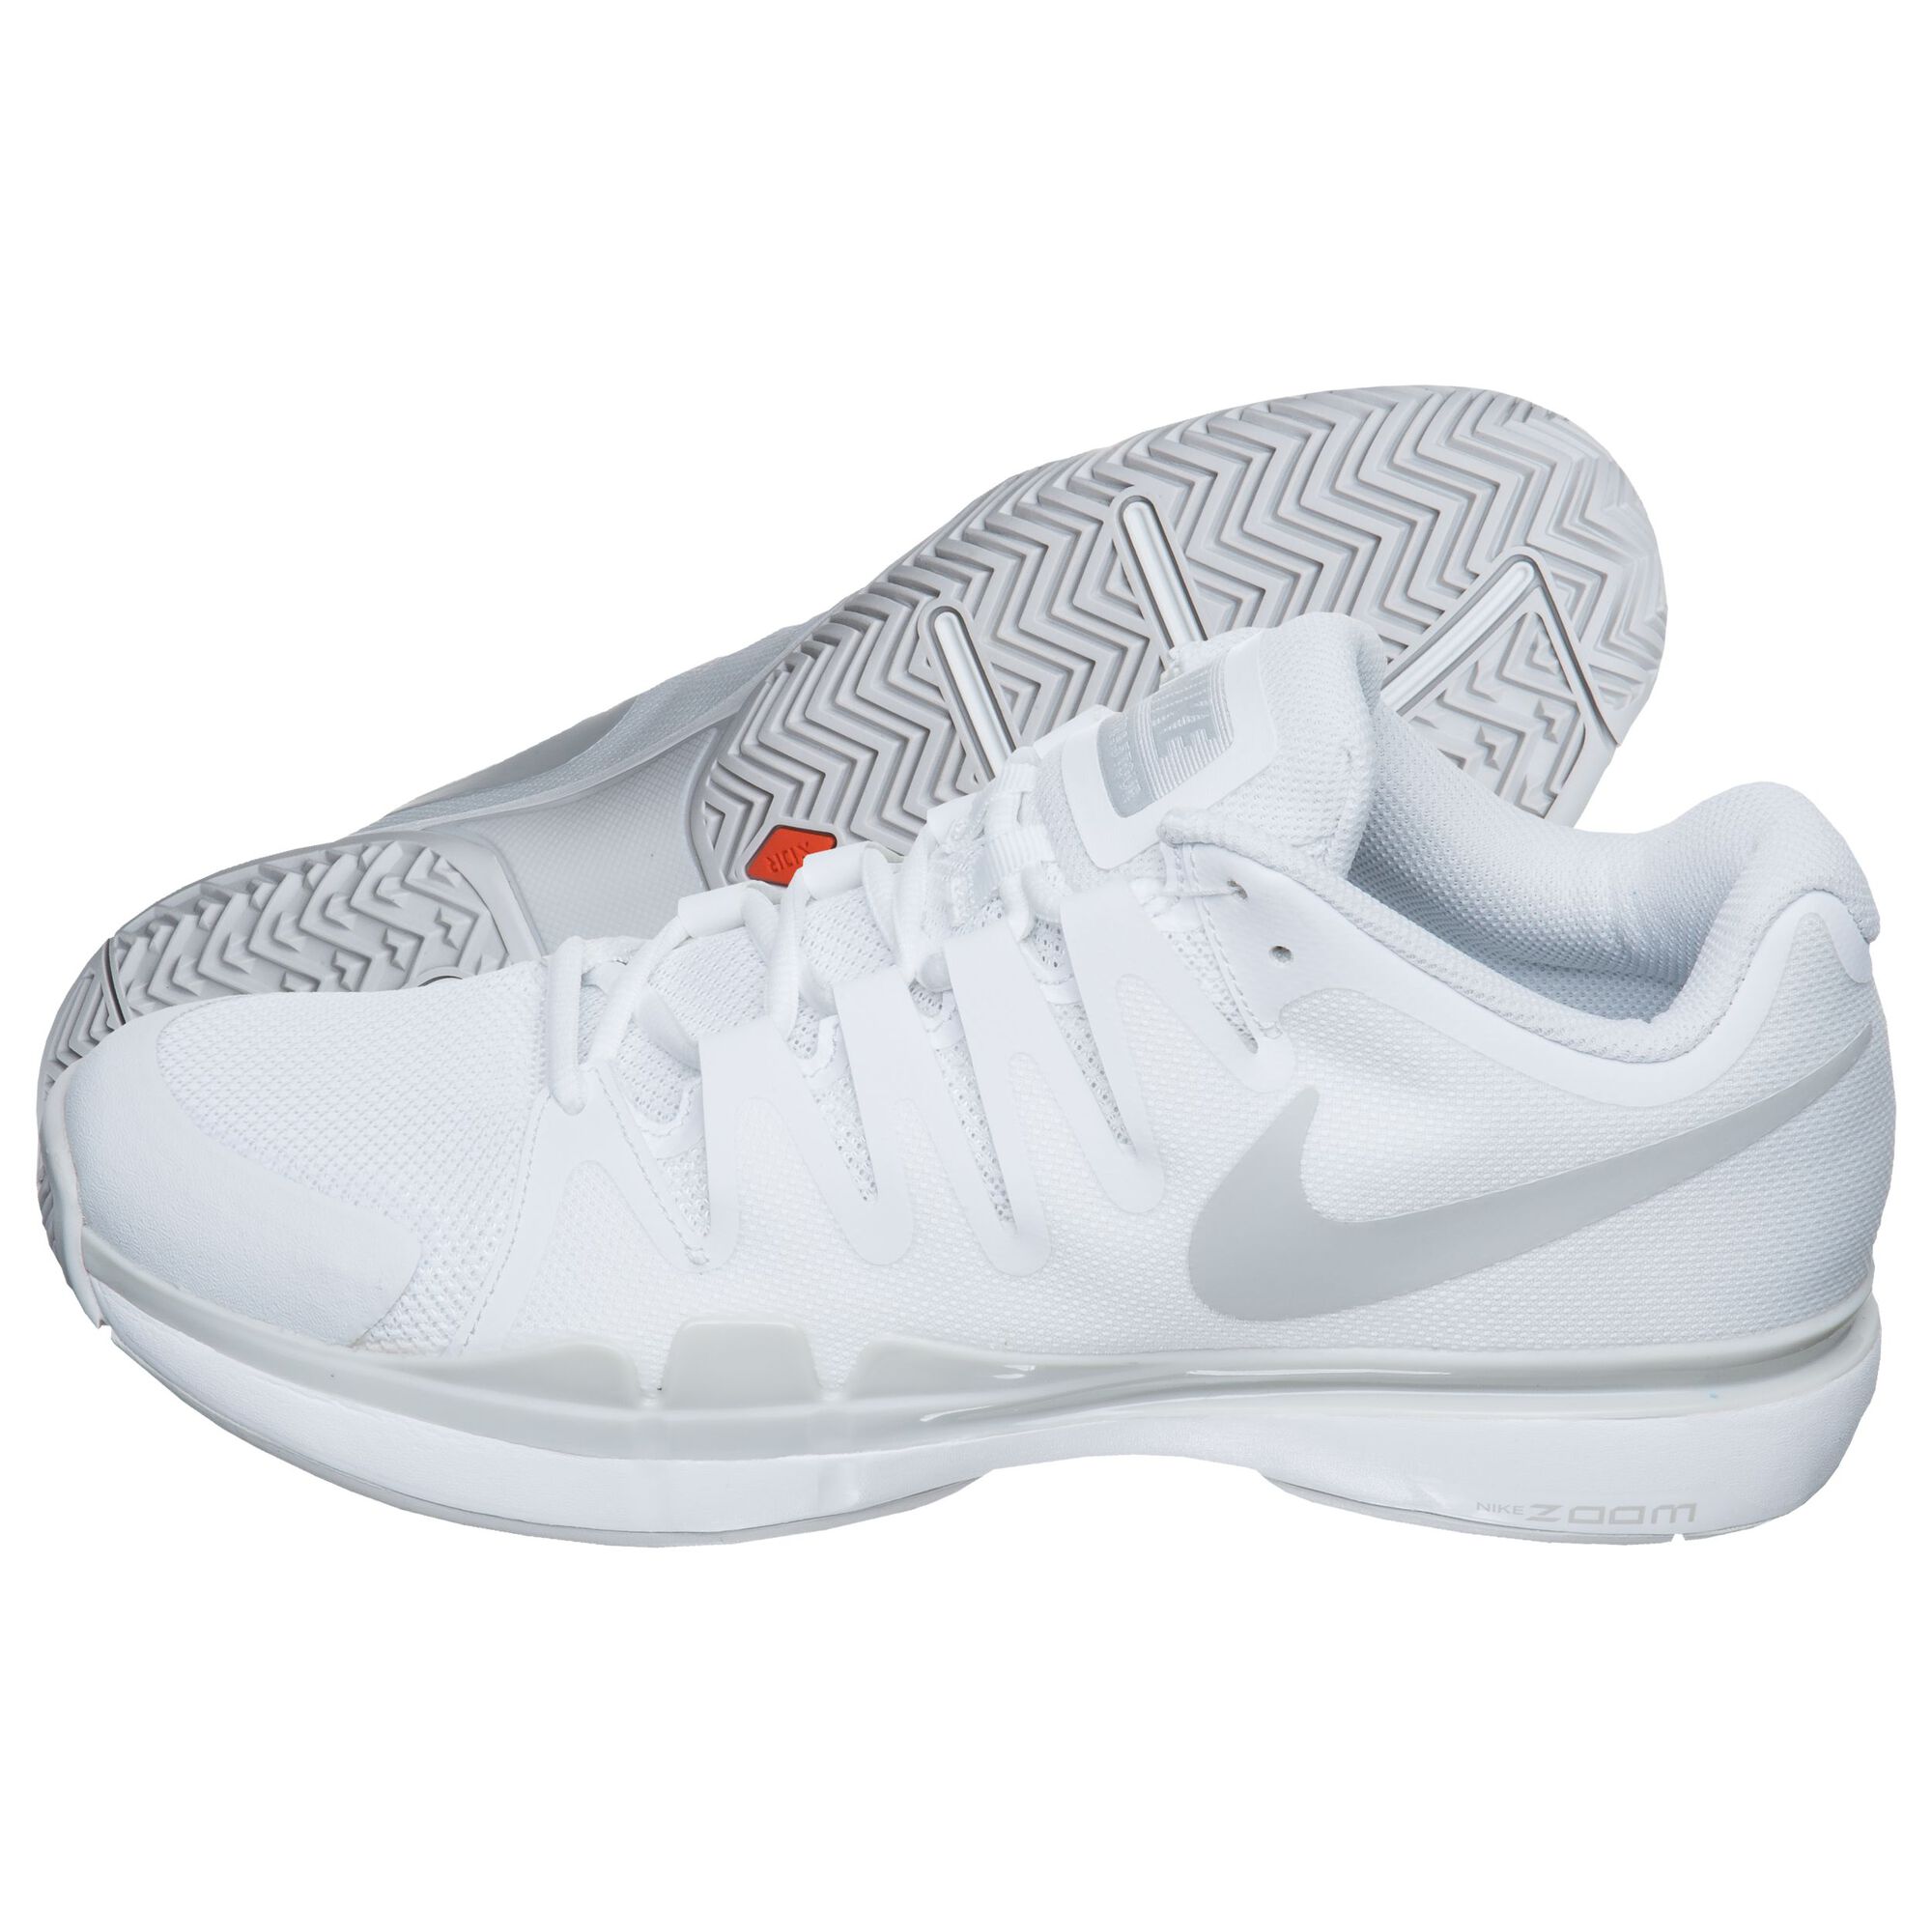 buy Nike Maria Sharapova 9.5 Tour All Court Shoe Women Cream online |